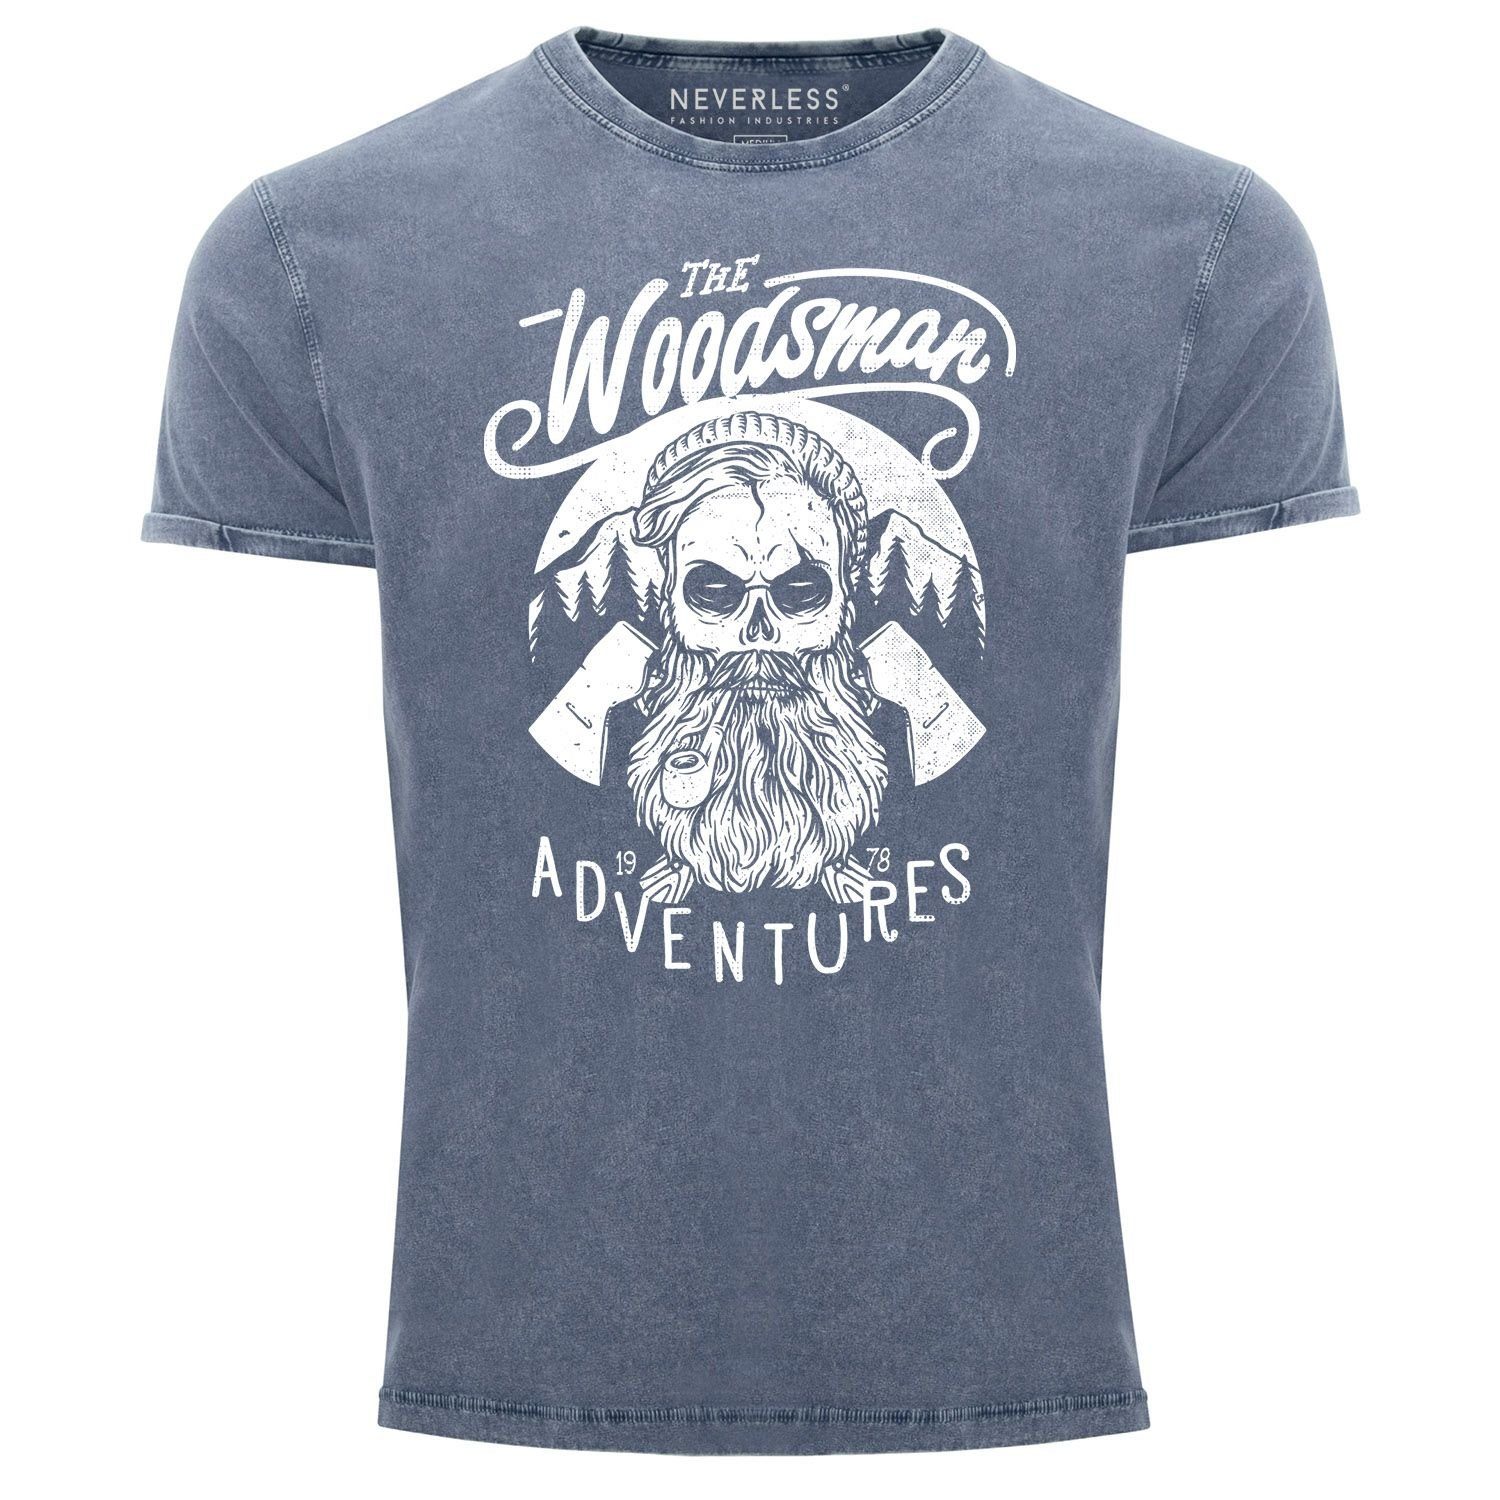 Neverless Print-Shirt Cooles Fit Lumberjack T-Shirt Shirt Bart Herren Angesagtes Look Print Aufdruck Hipster Slim blau Vintage mit Used Woodsman Skull Neverless®